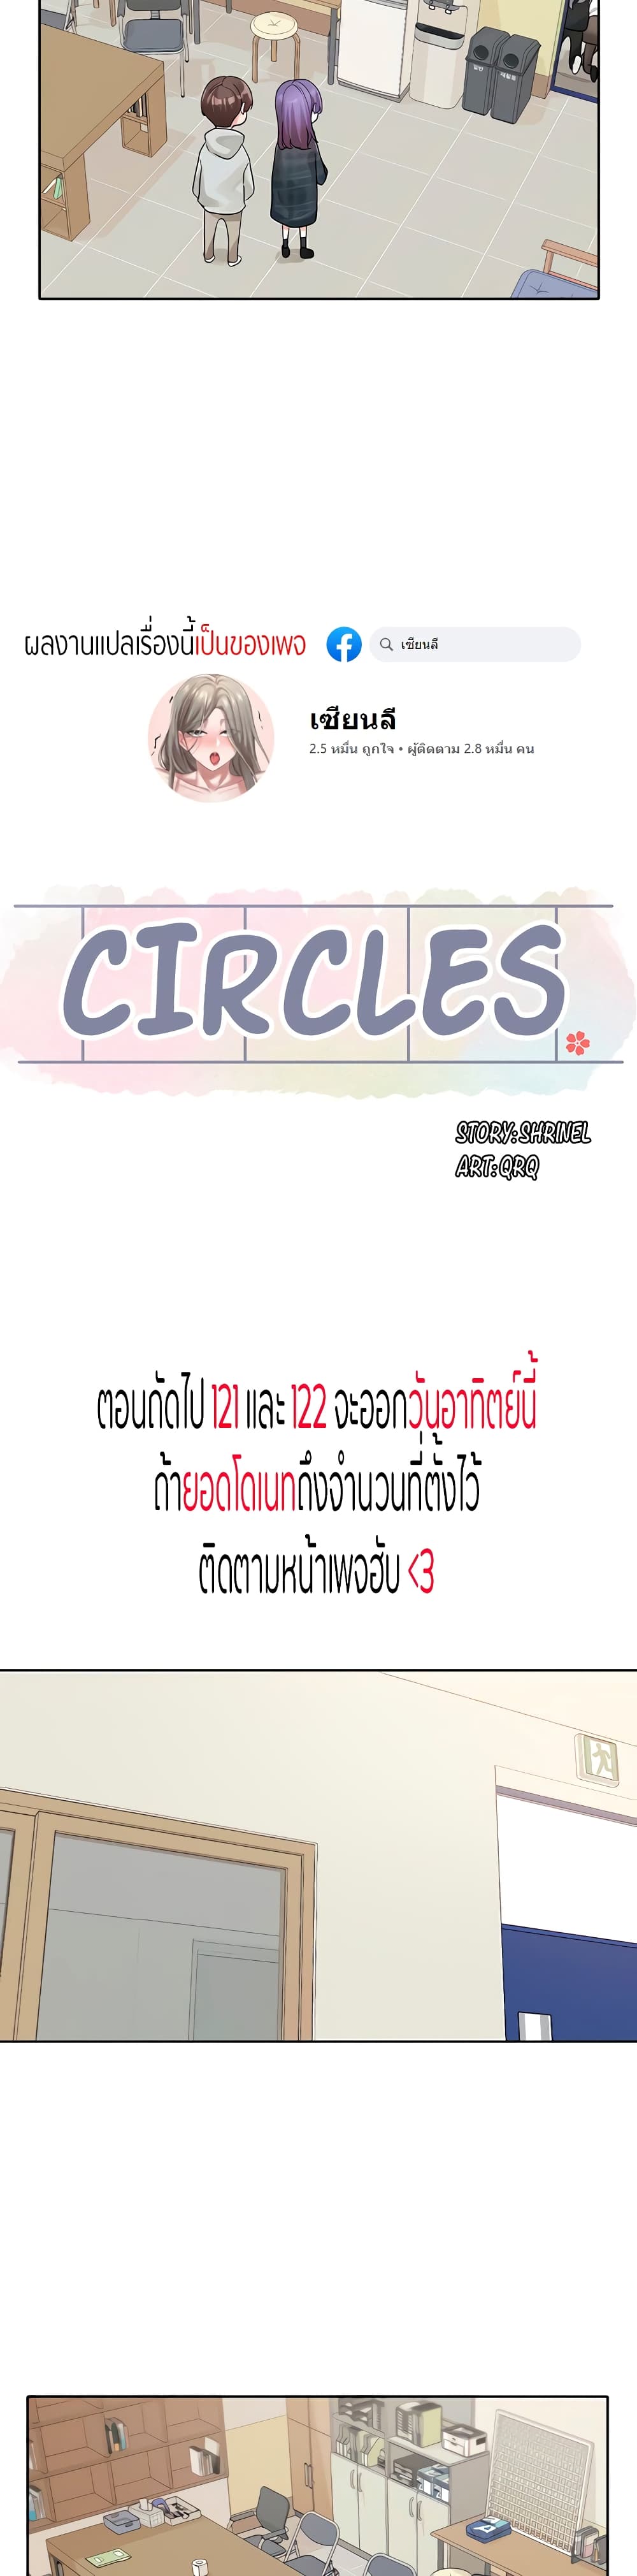 Theater Society (Circles) 120 (17)